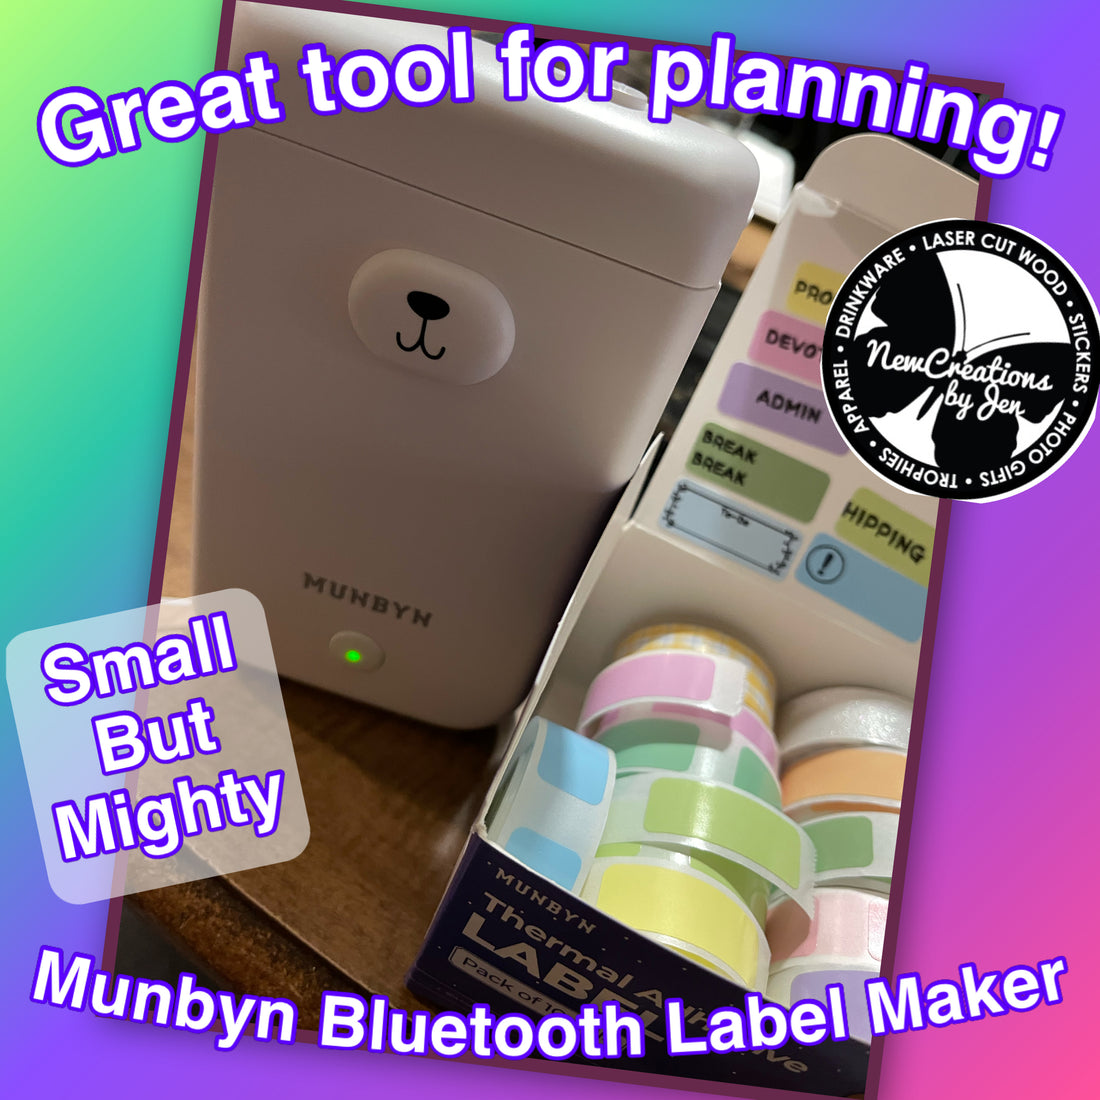 Munbyn Bluetooth Label Maker